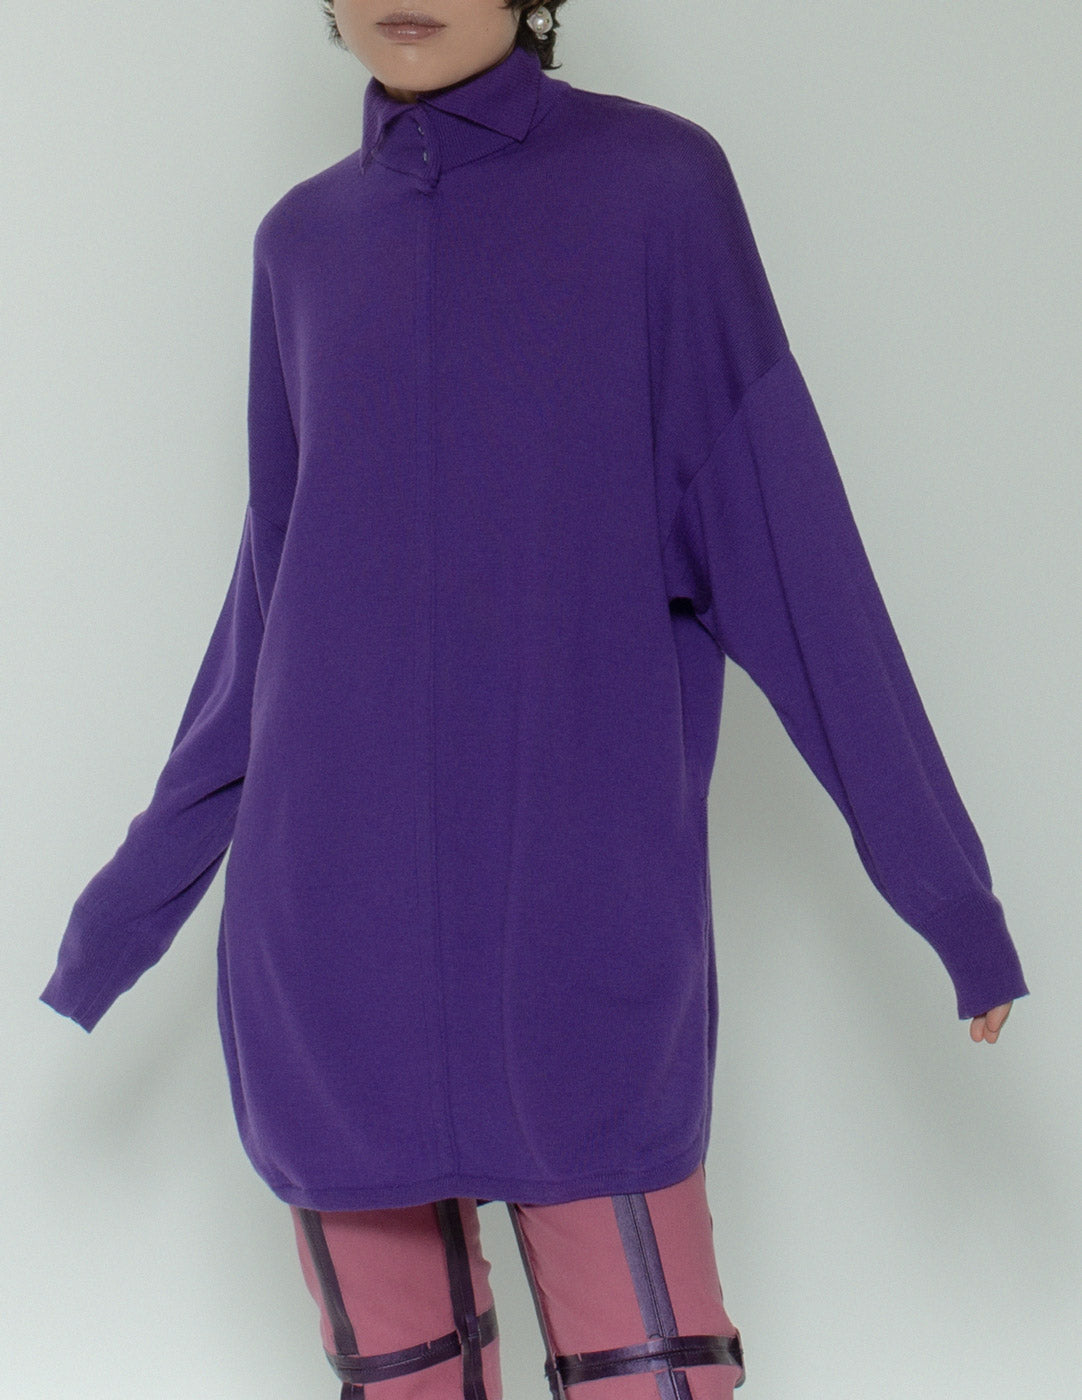 Gianni Versace vintage purple wool sweater front detail